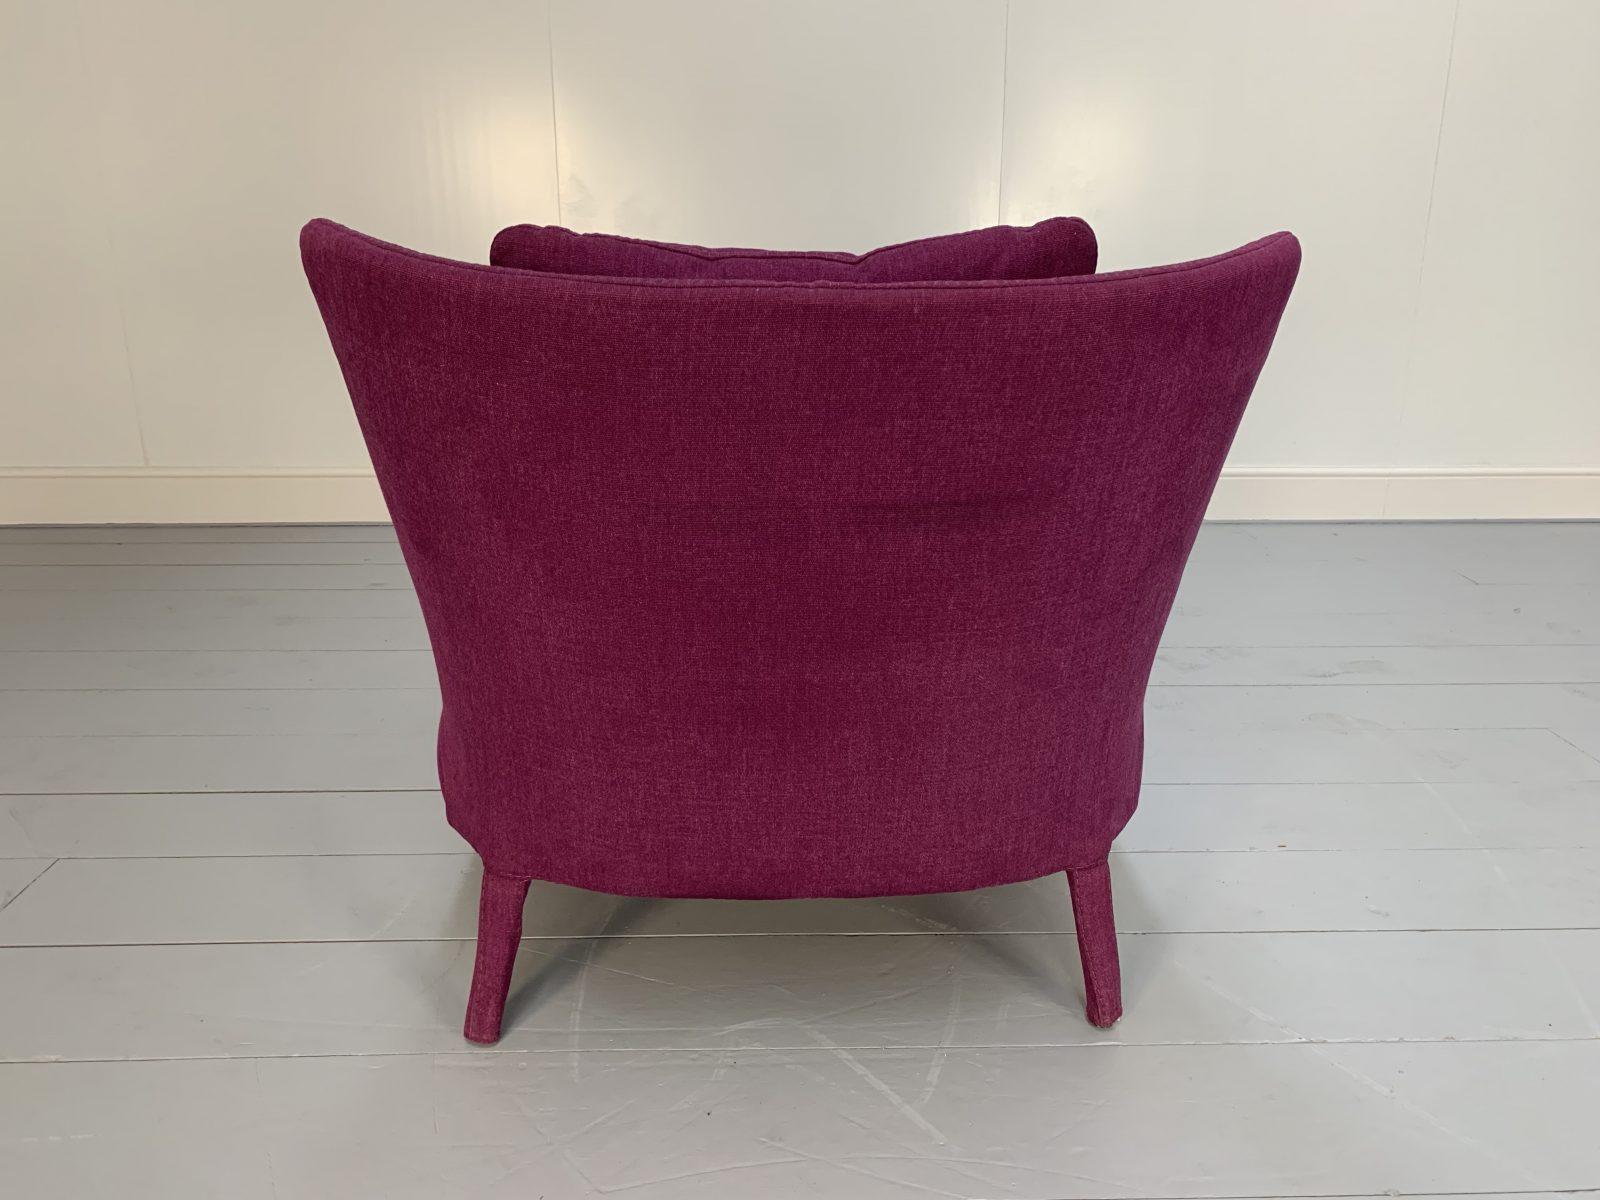 Italian B&B Italia “Febo” Chaise Lounge Sofa in Violet “Enia” Chenille For Sale